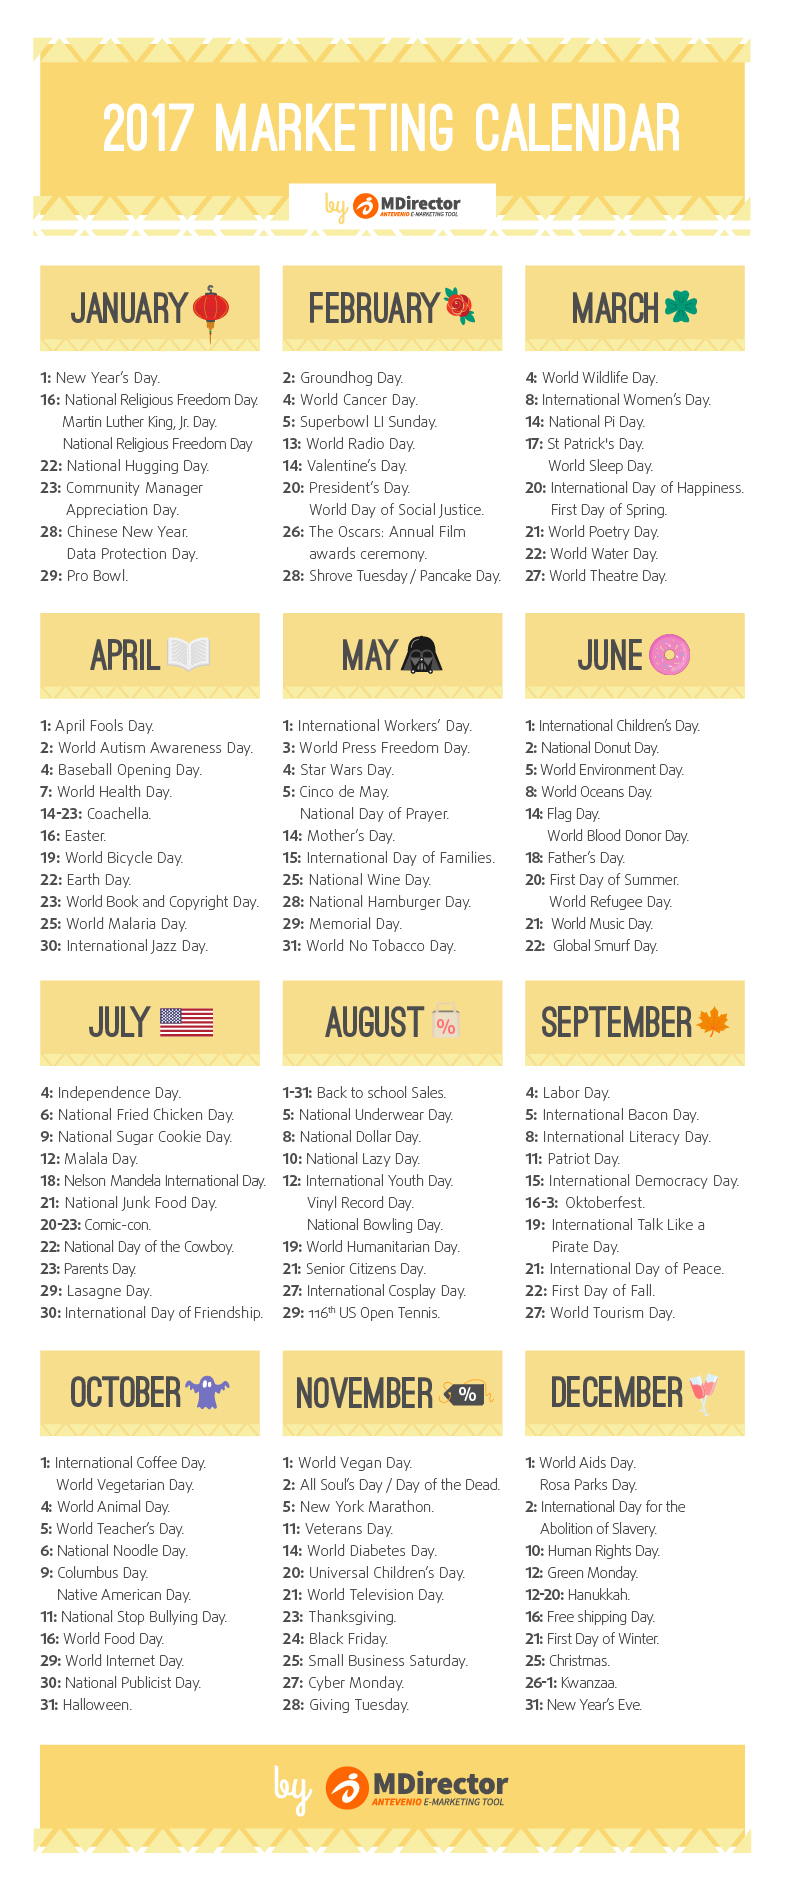 2017 Marketing Calendar